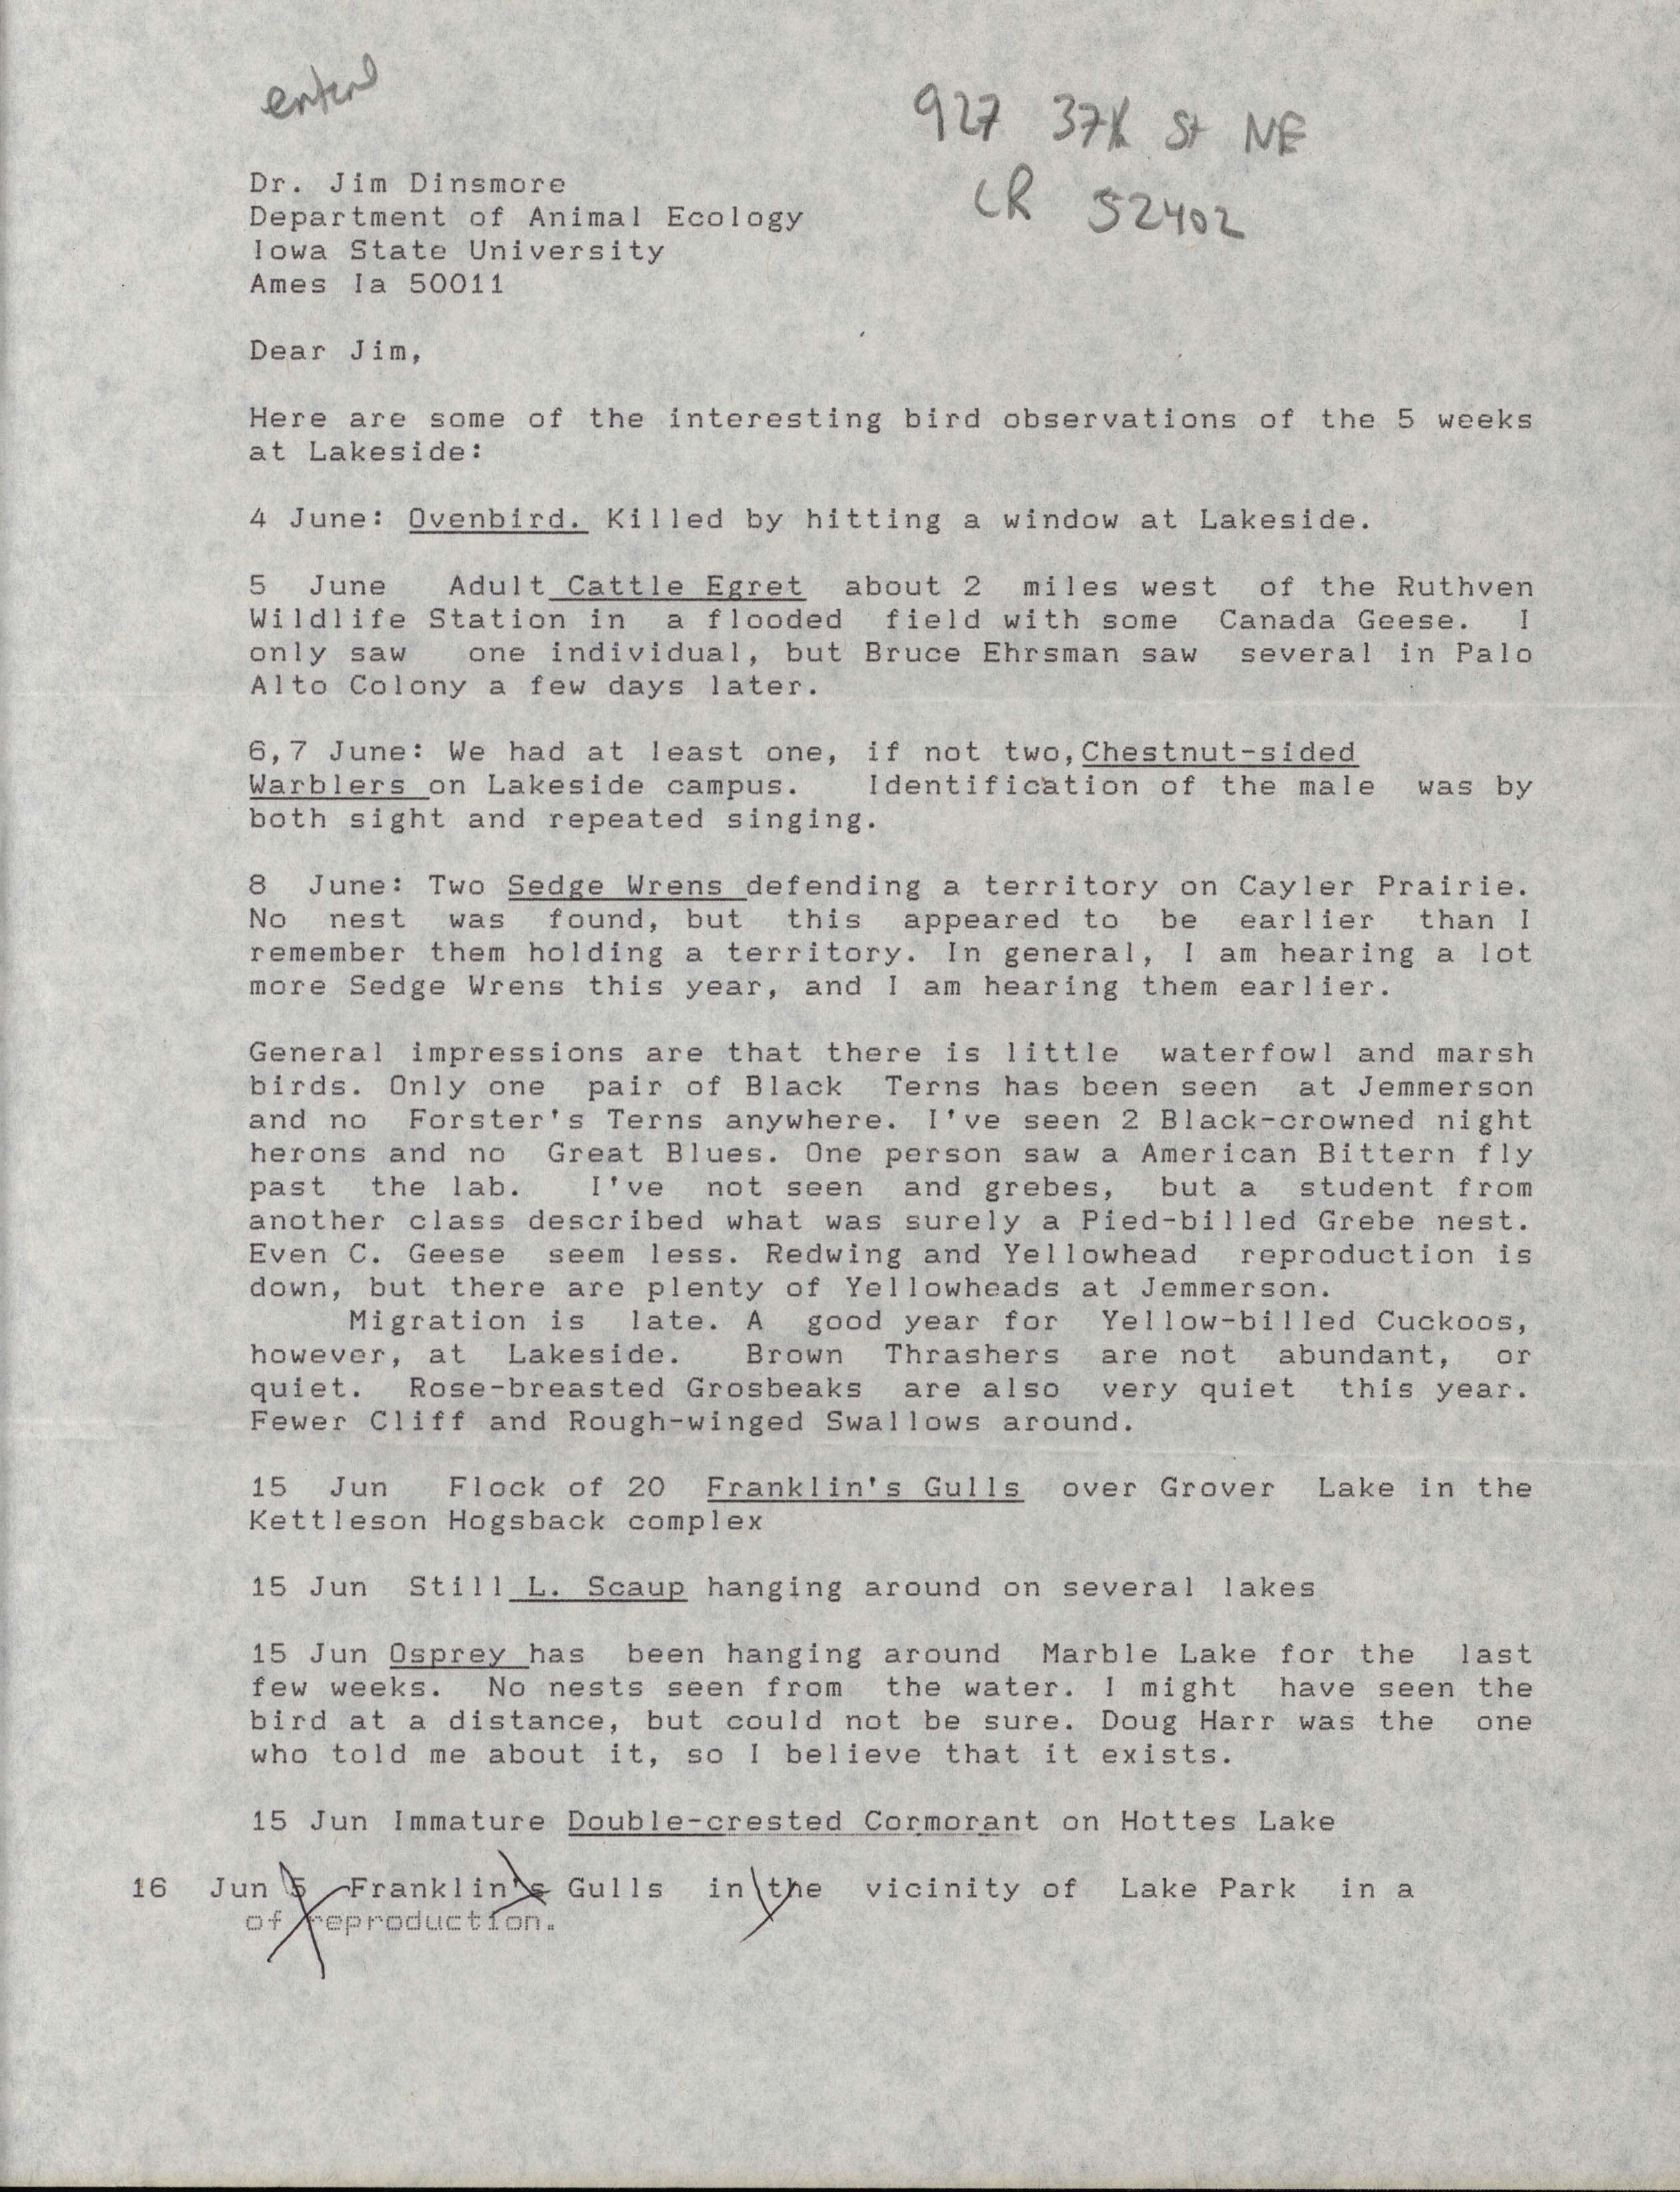 Neil Bernstein letter to James J. Dinsmore regarding summer bird sightings, summer 1993